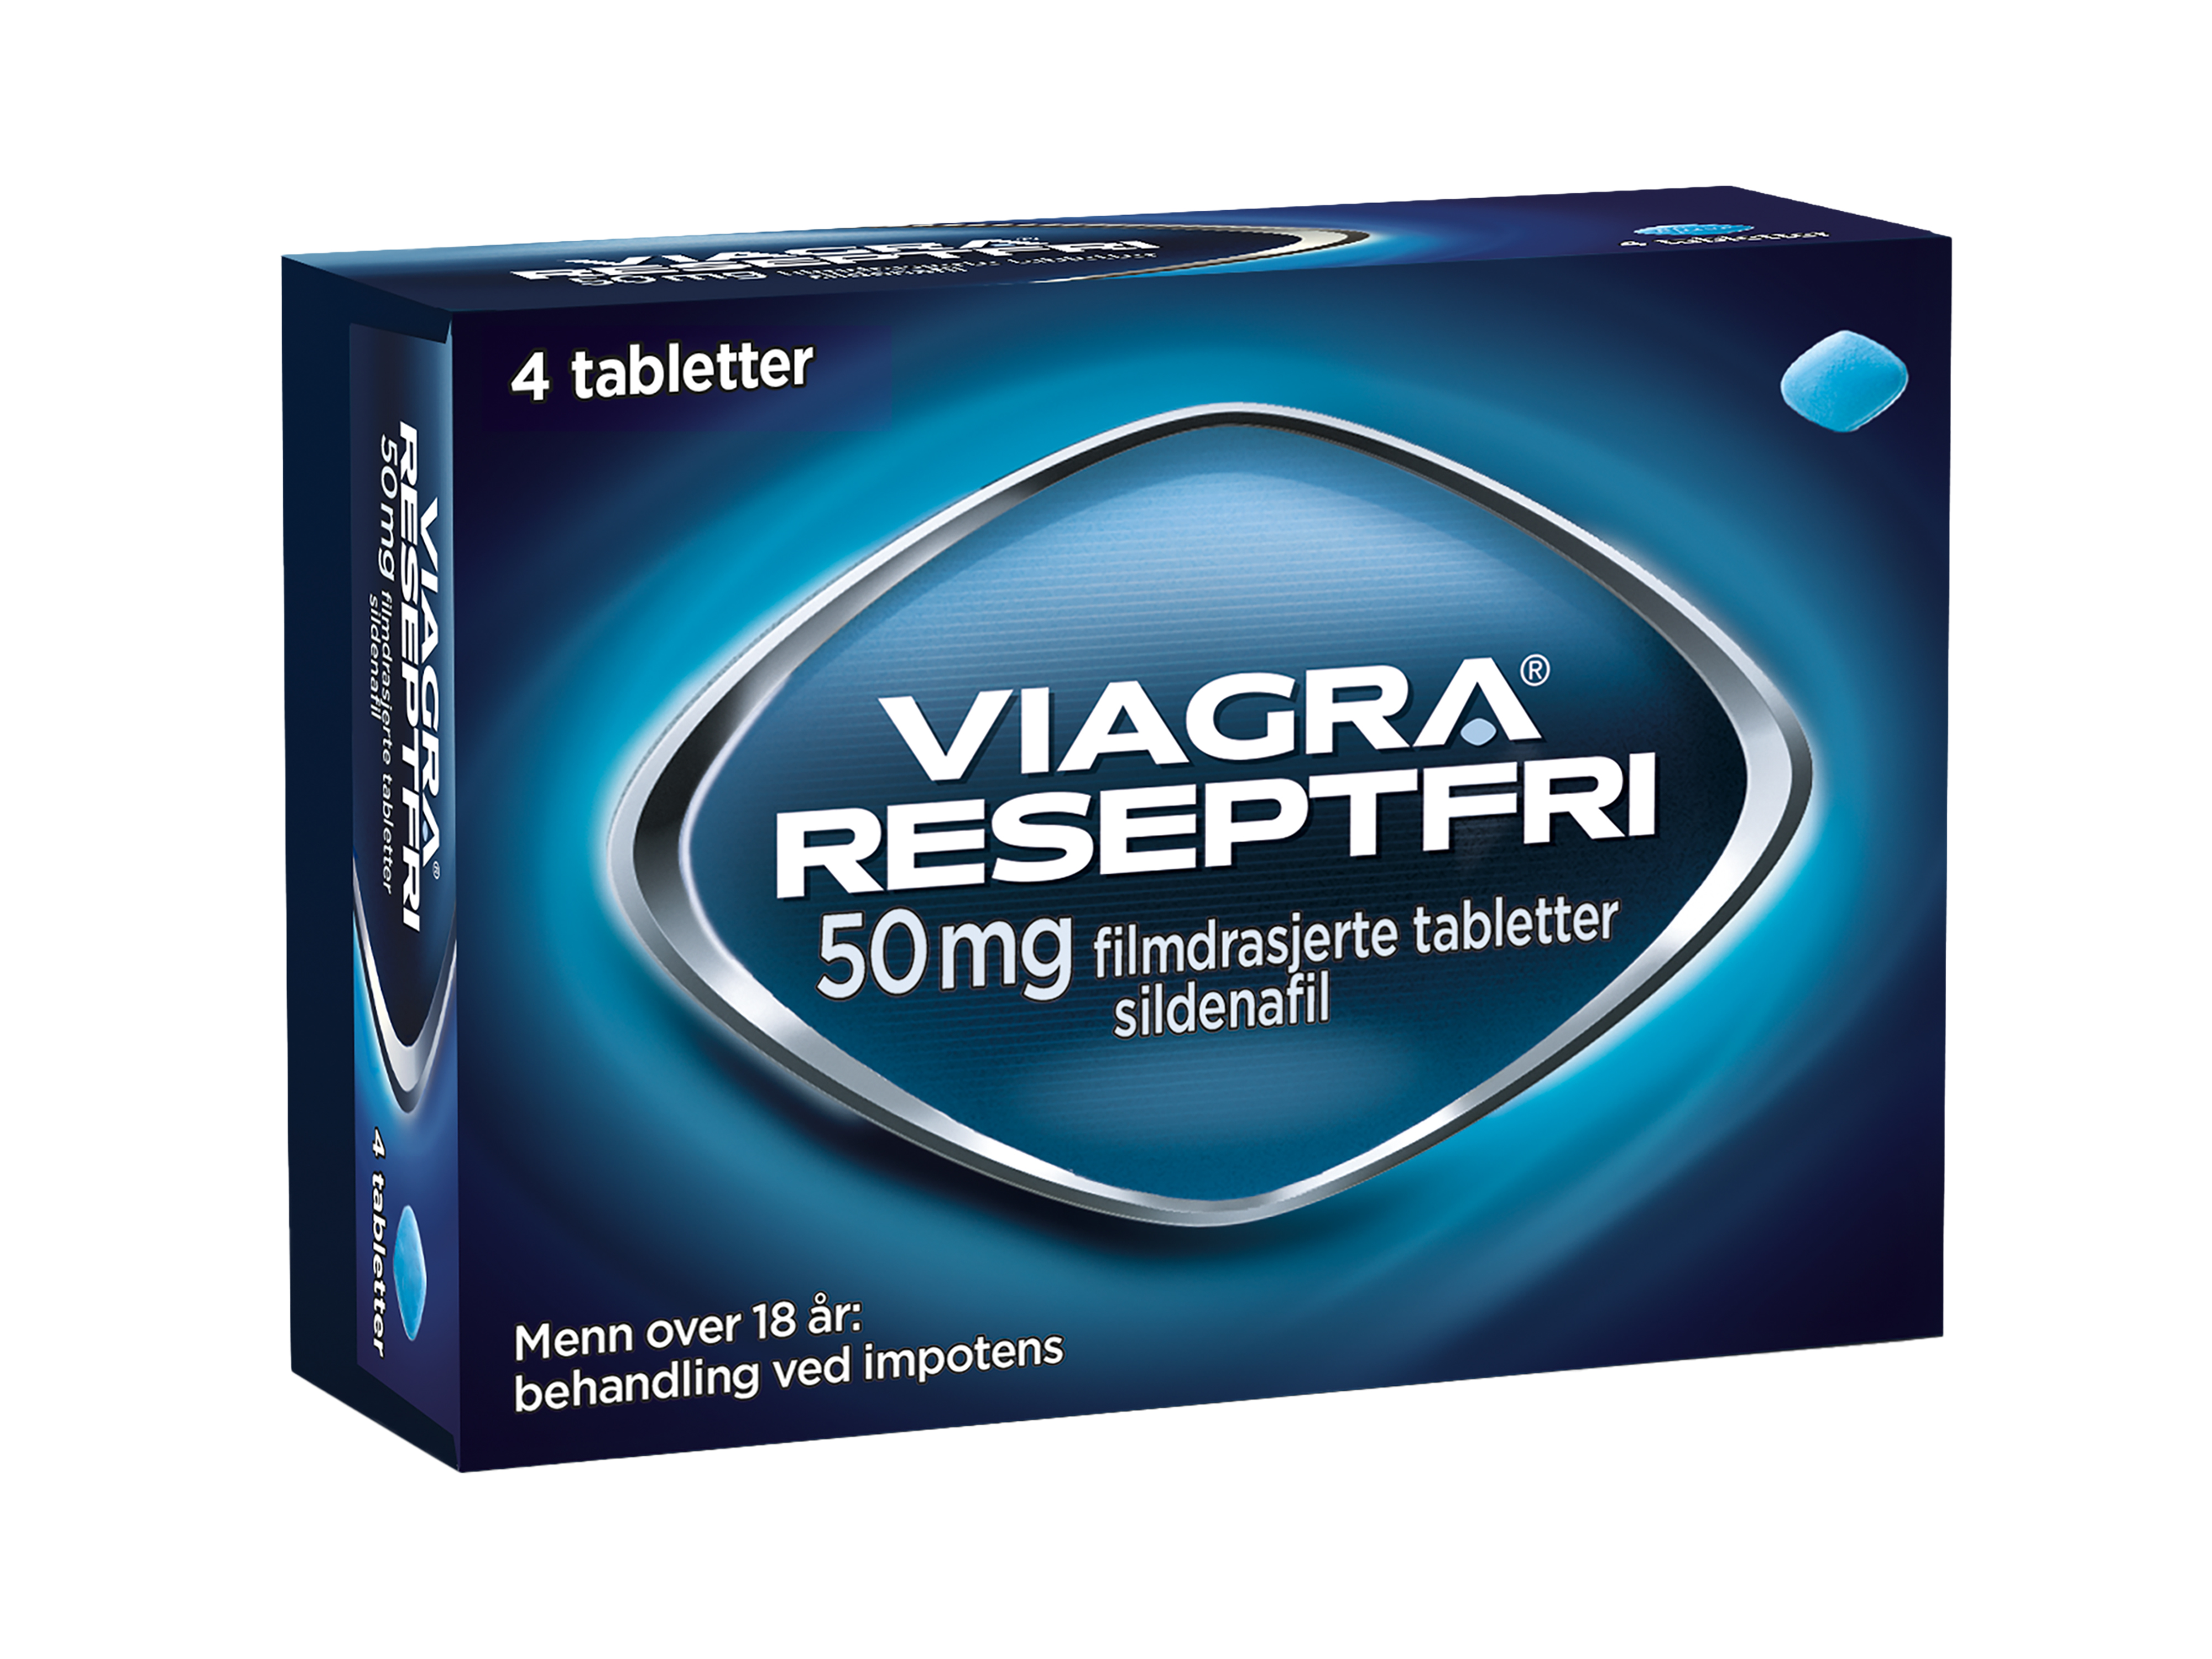 Viagra Reseptfri® 50 mg tabletter, 4 stk.